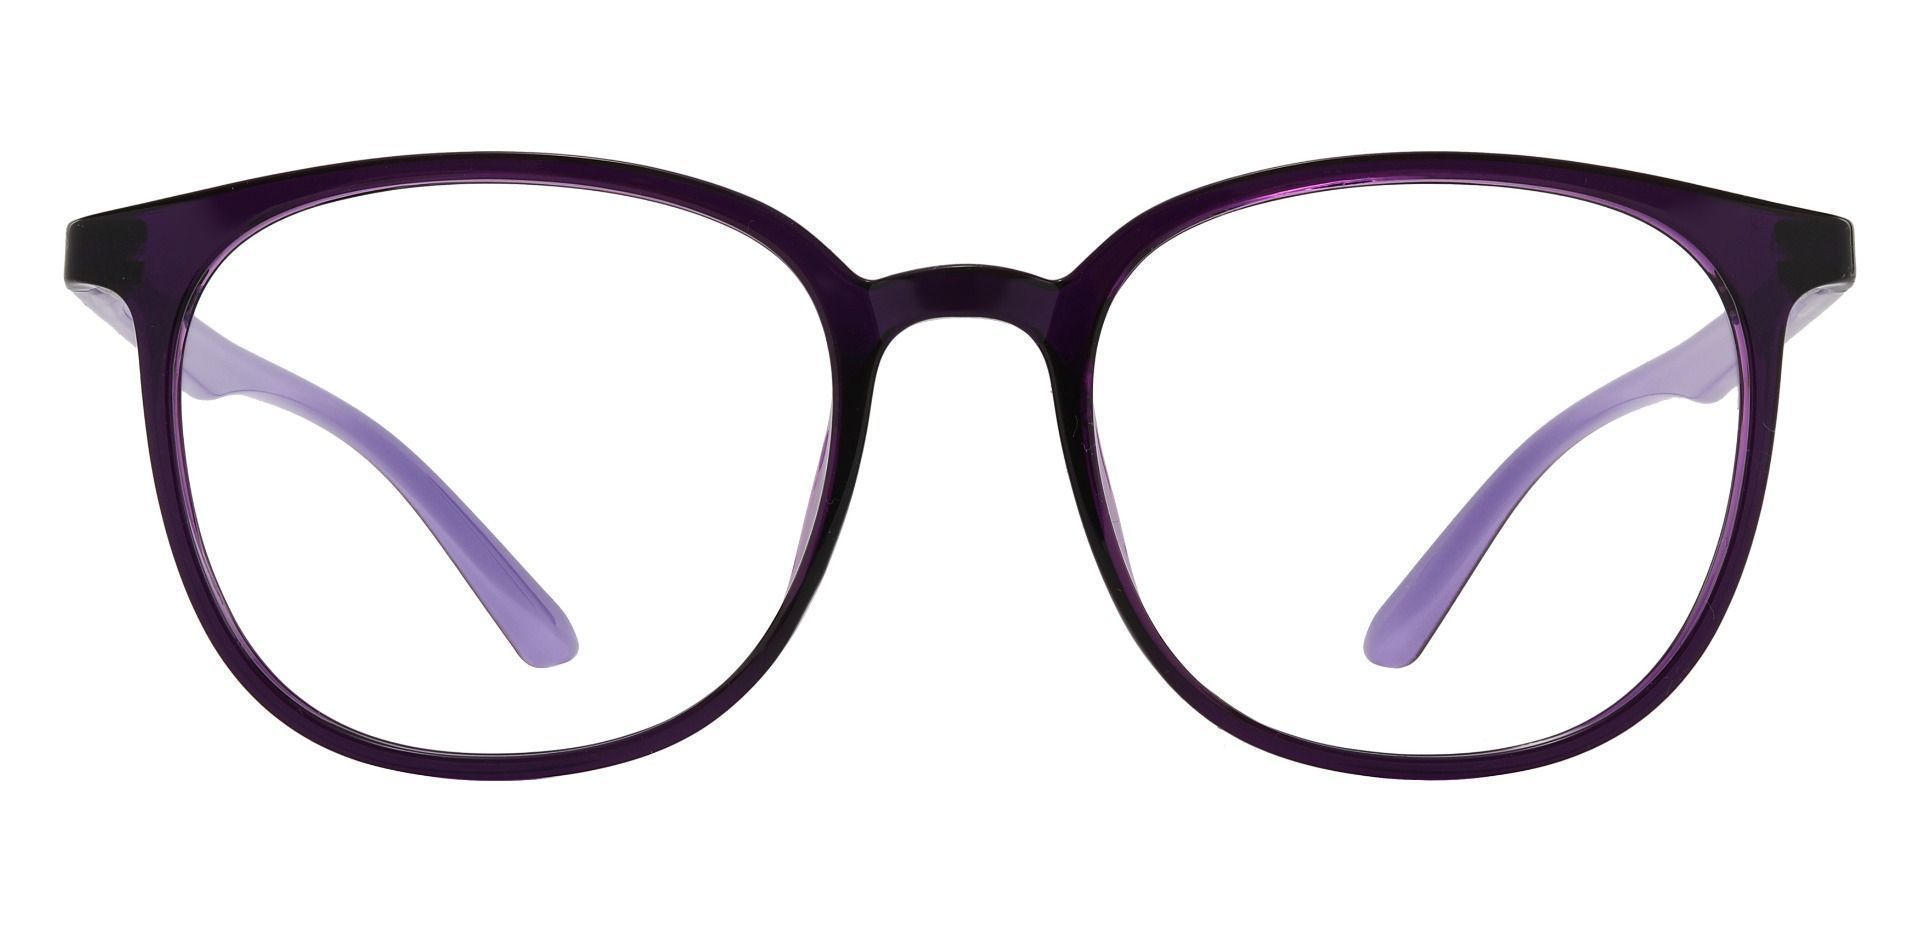 Kelso Square Reading Glasses - Purple